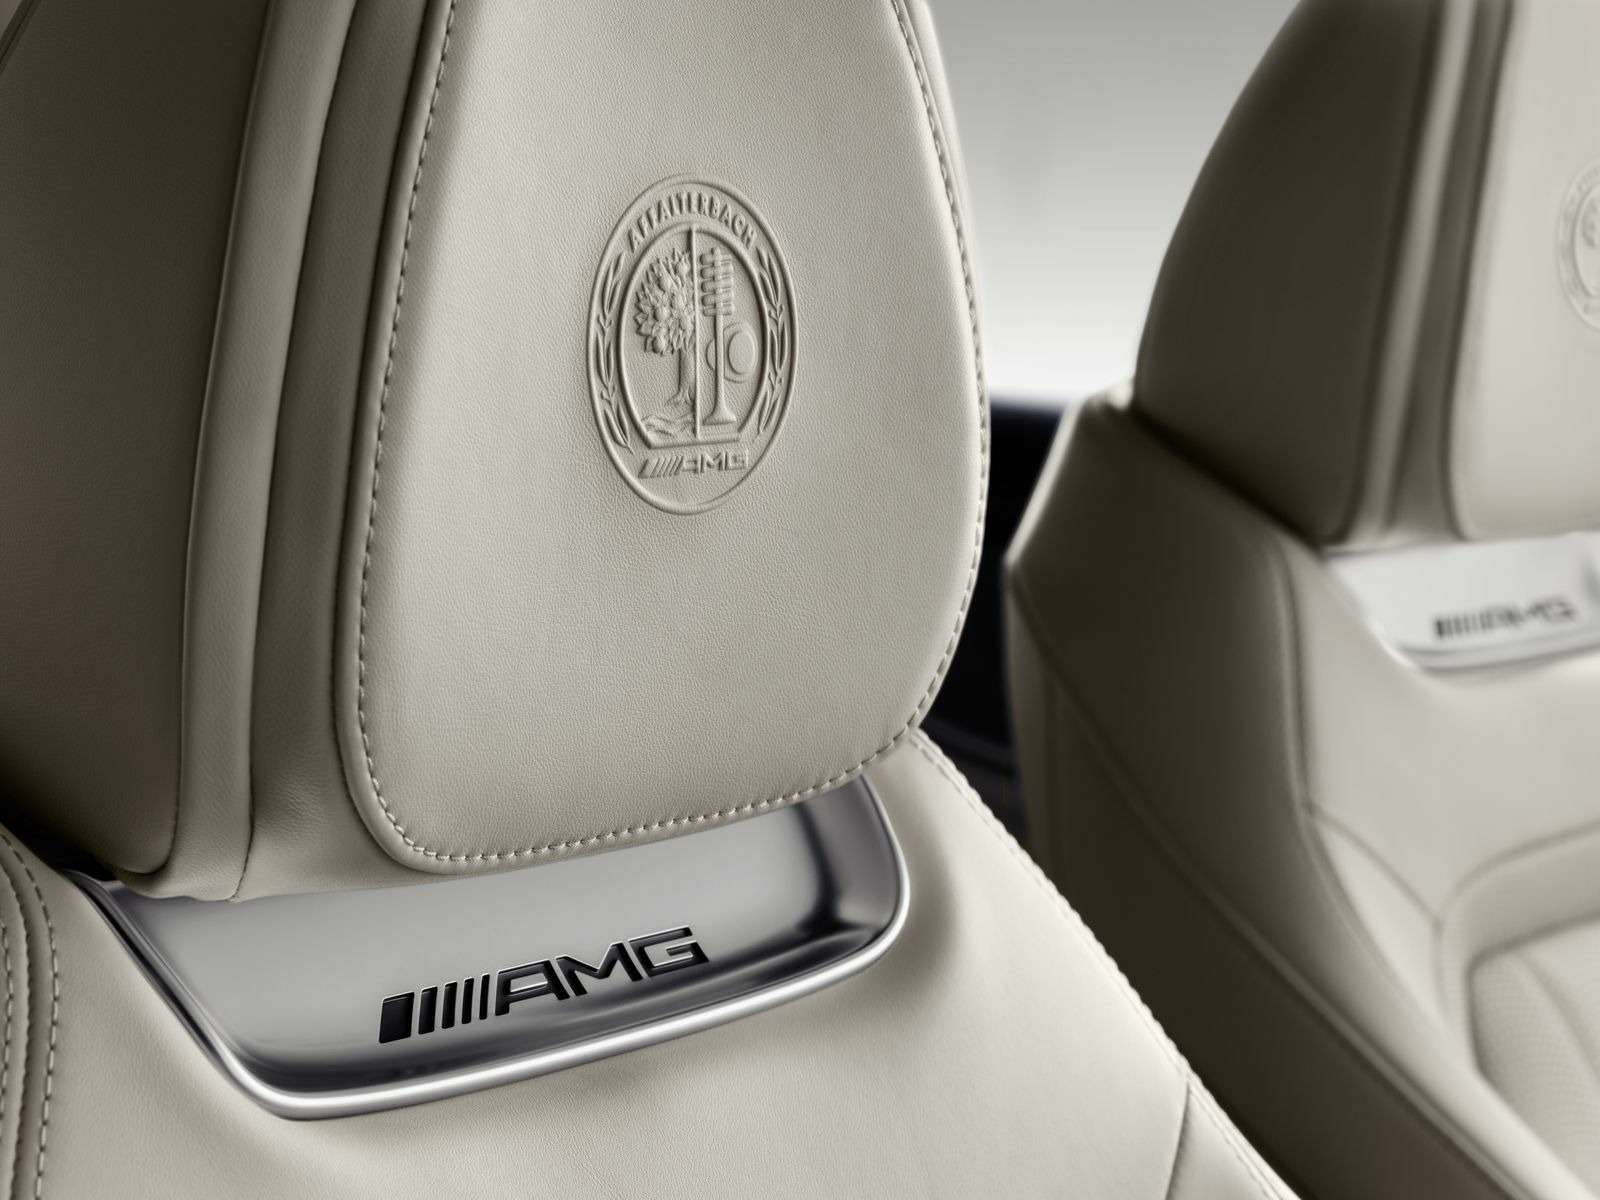 Подмена! Пятидверный Mercedes-AMG GT получил «тележку» Е-класса — фото 851528